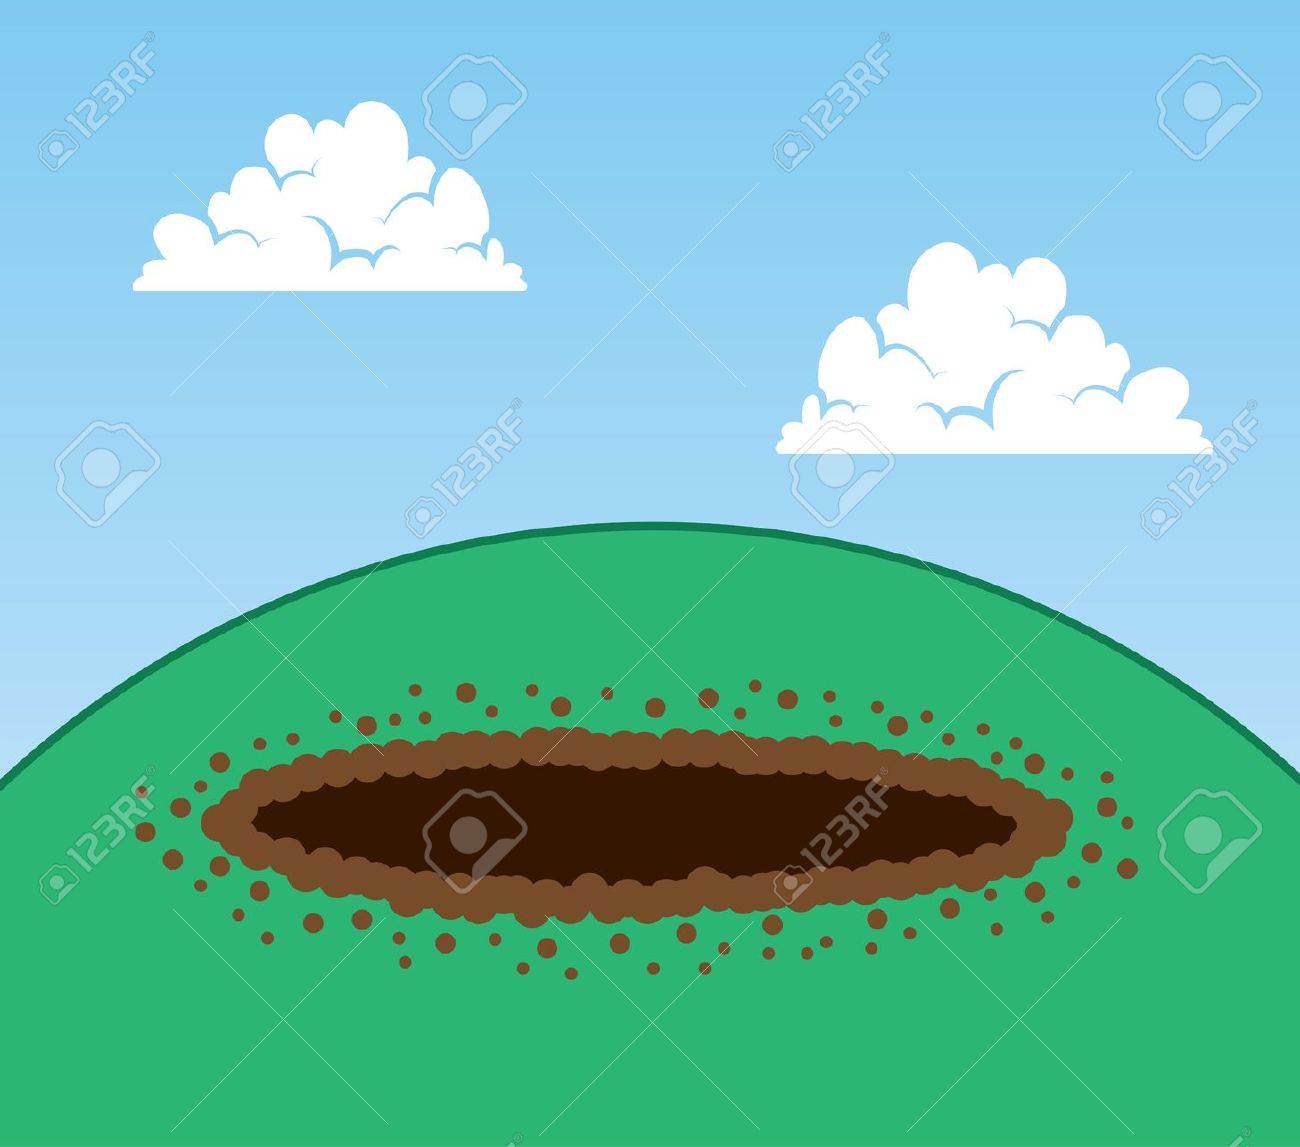 hole clipart underground burrow